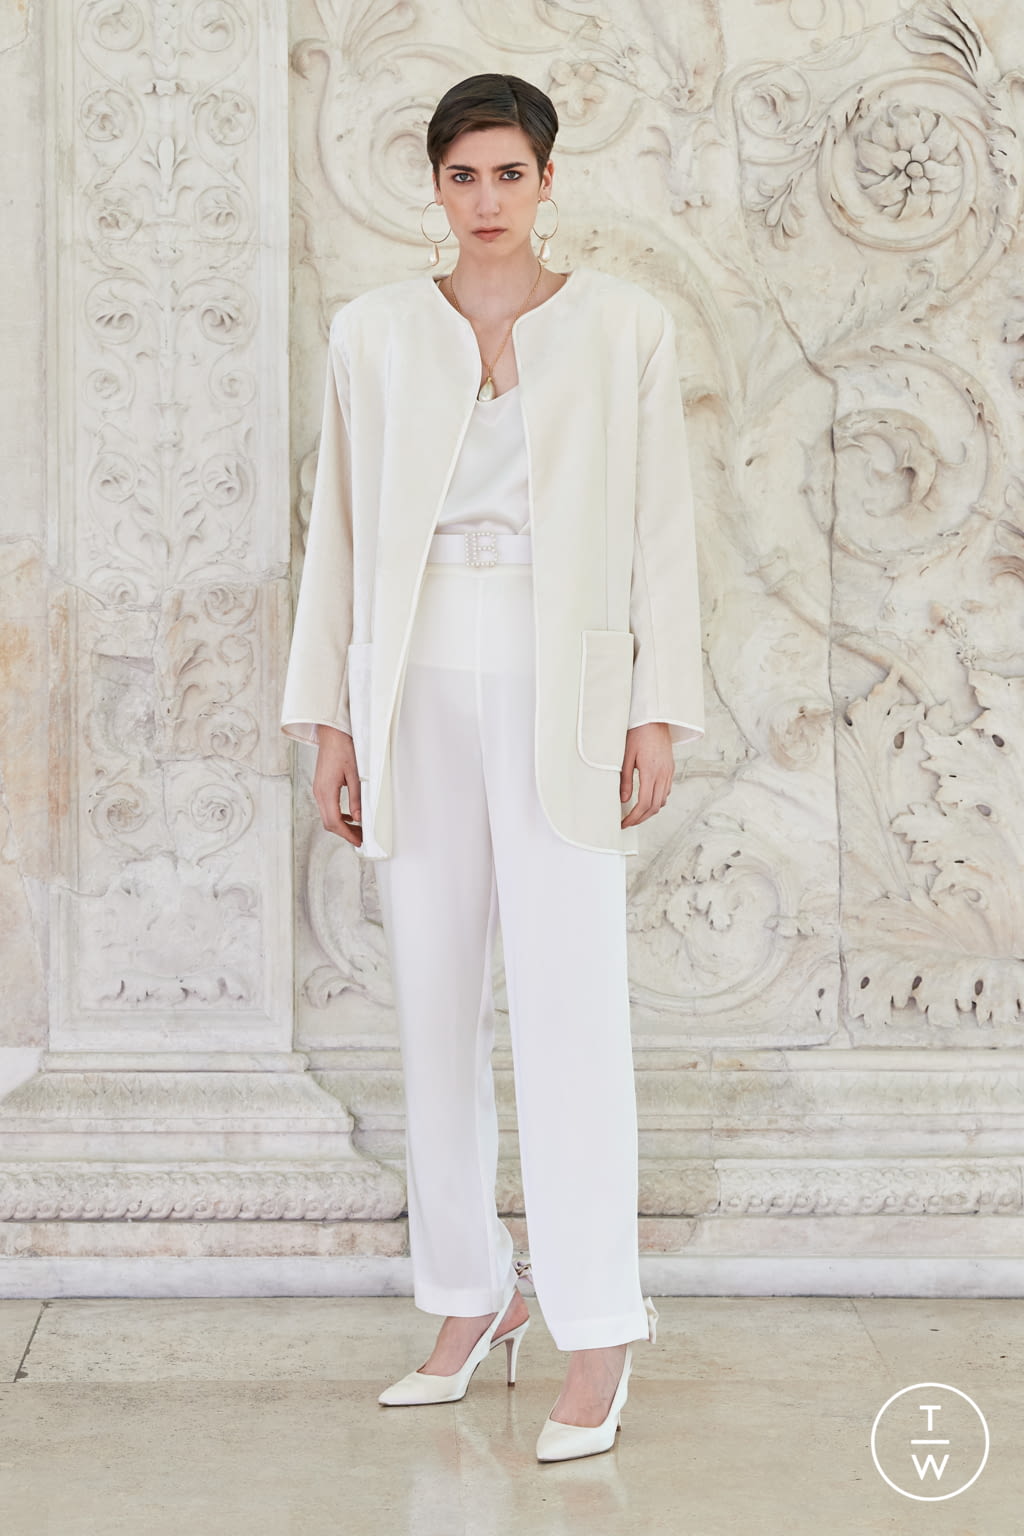 Louis Vuitton FW21 womenswear #21 - Tagwalk: el buscador de moda